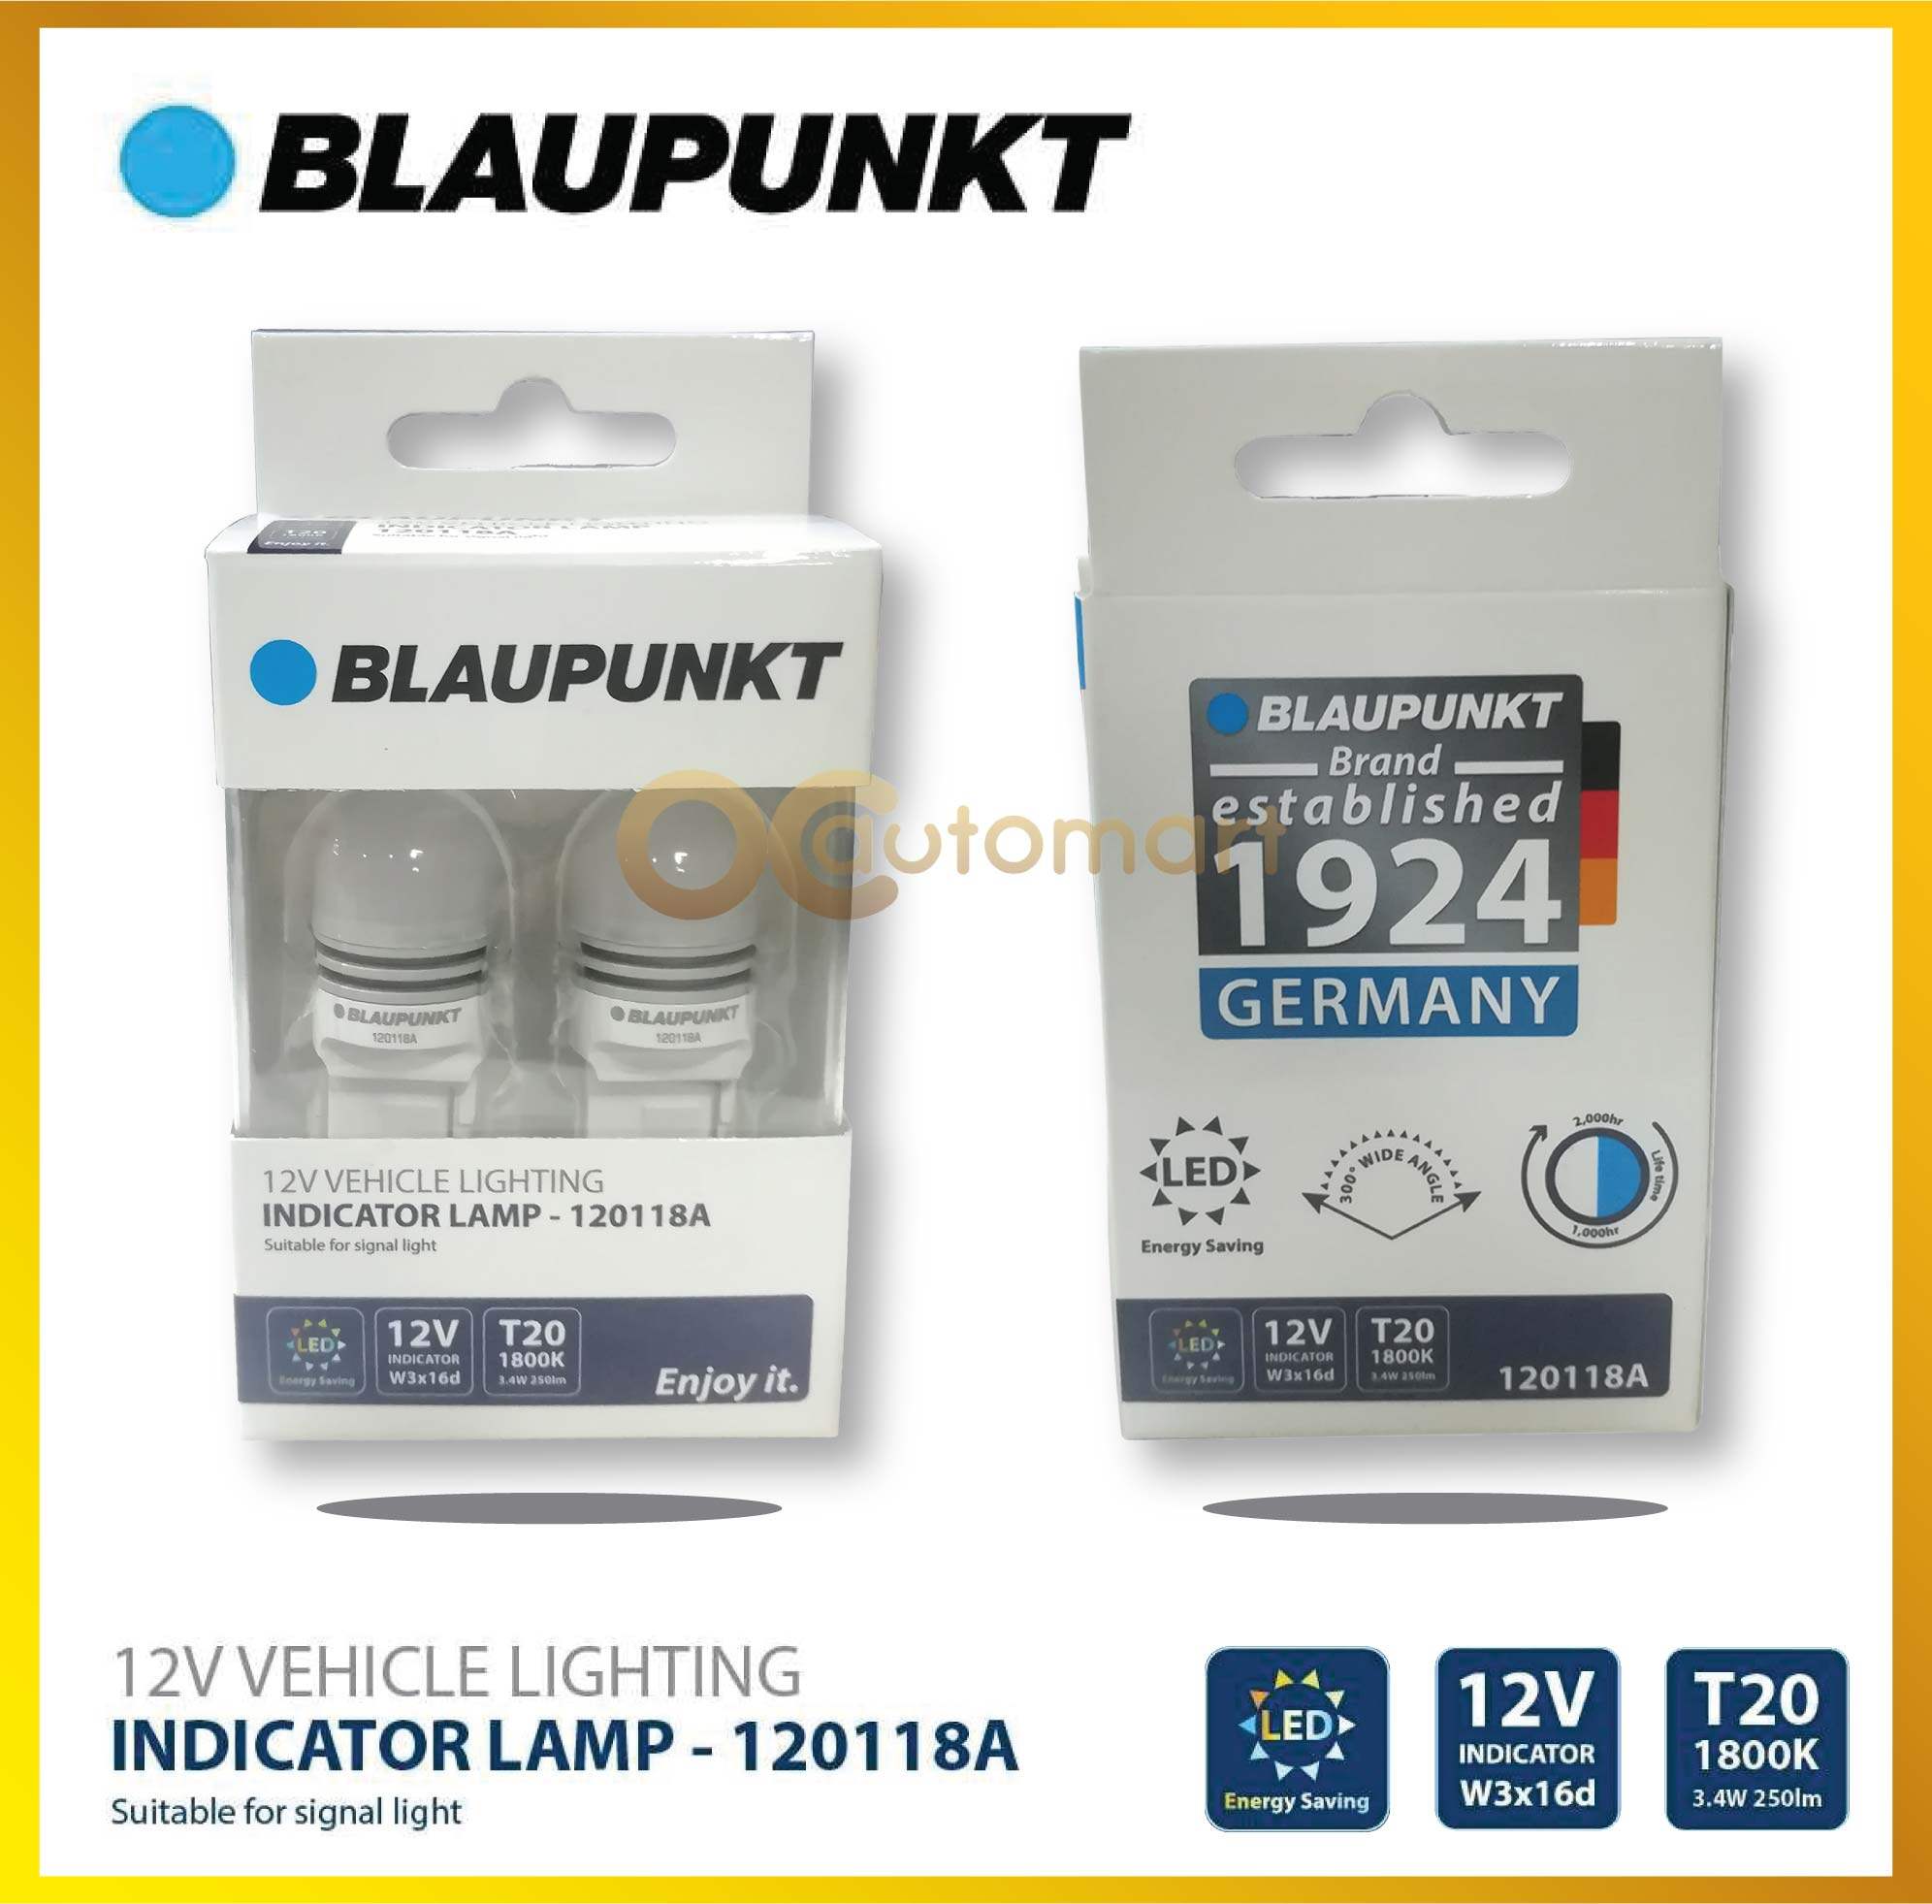 BLAUPUNKT INDICATOR LAMP 120118A 12V VEHICLE LIGHTING T20 1800K BULB